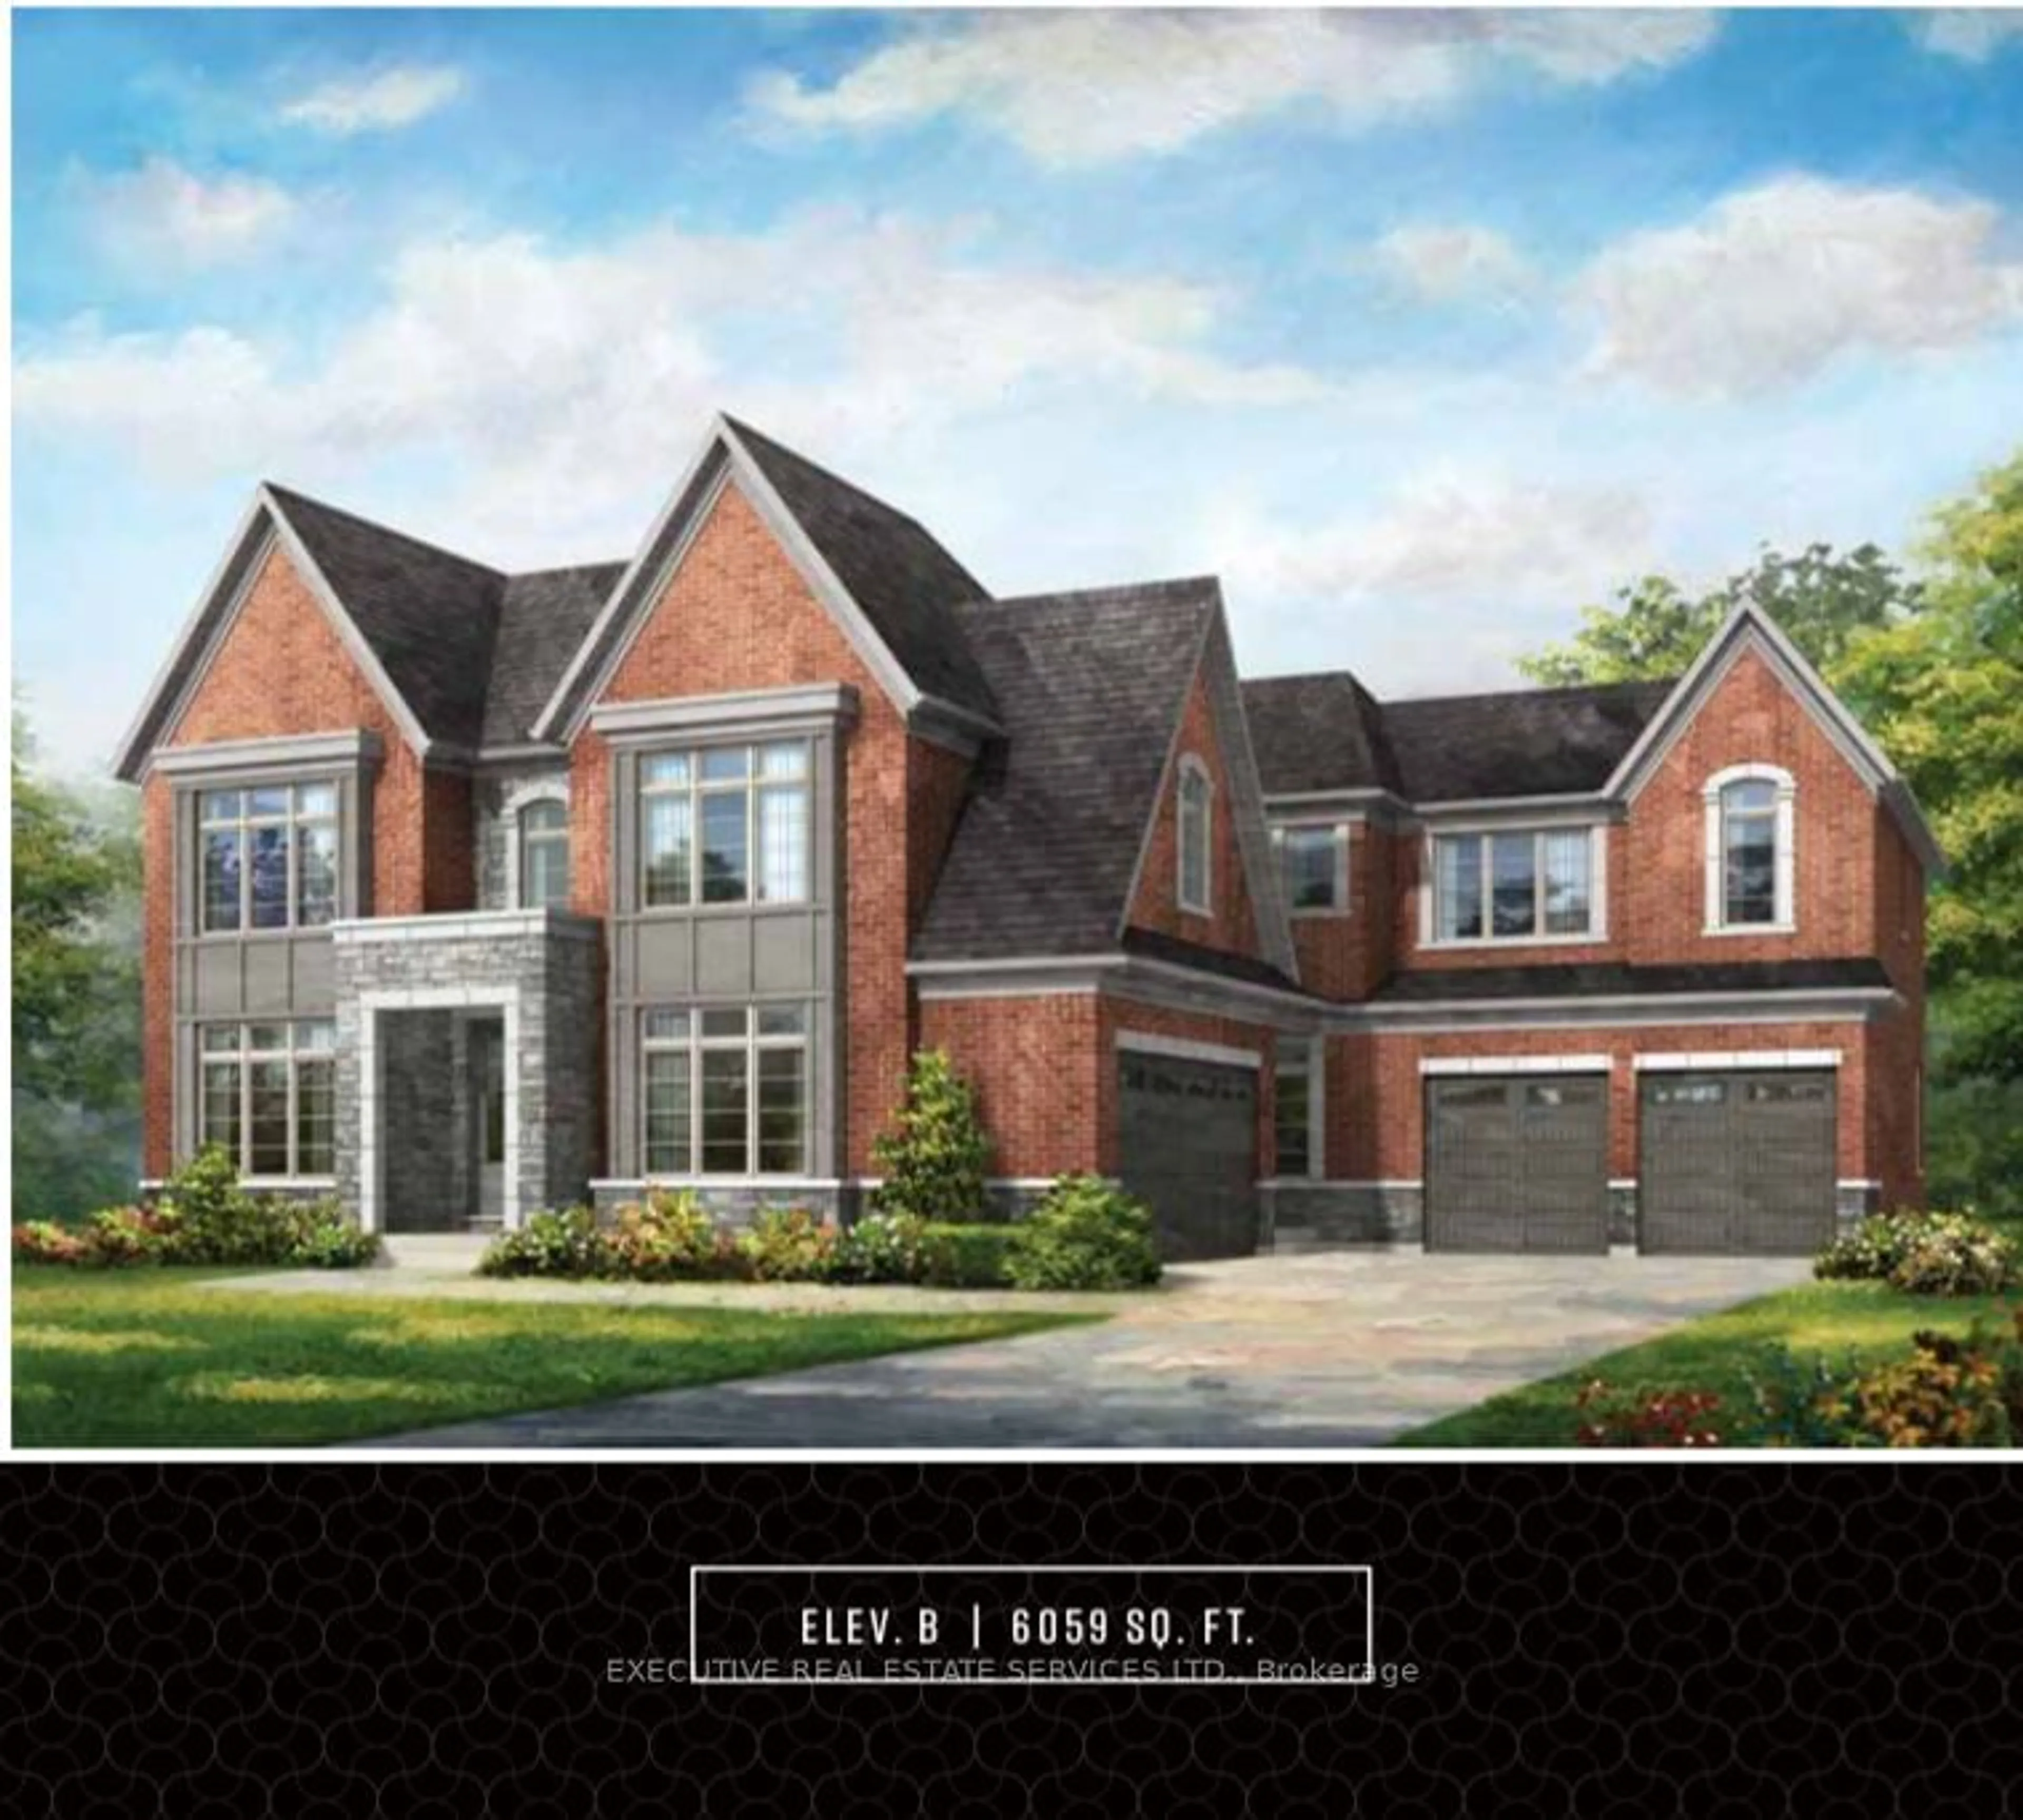 Home with brick exterior material for 5 Magnolia Ave, Adjala-Tosorontio Ontario L0G 1W0